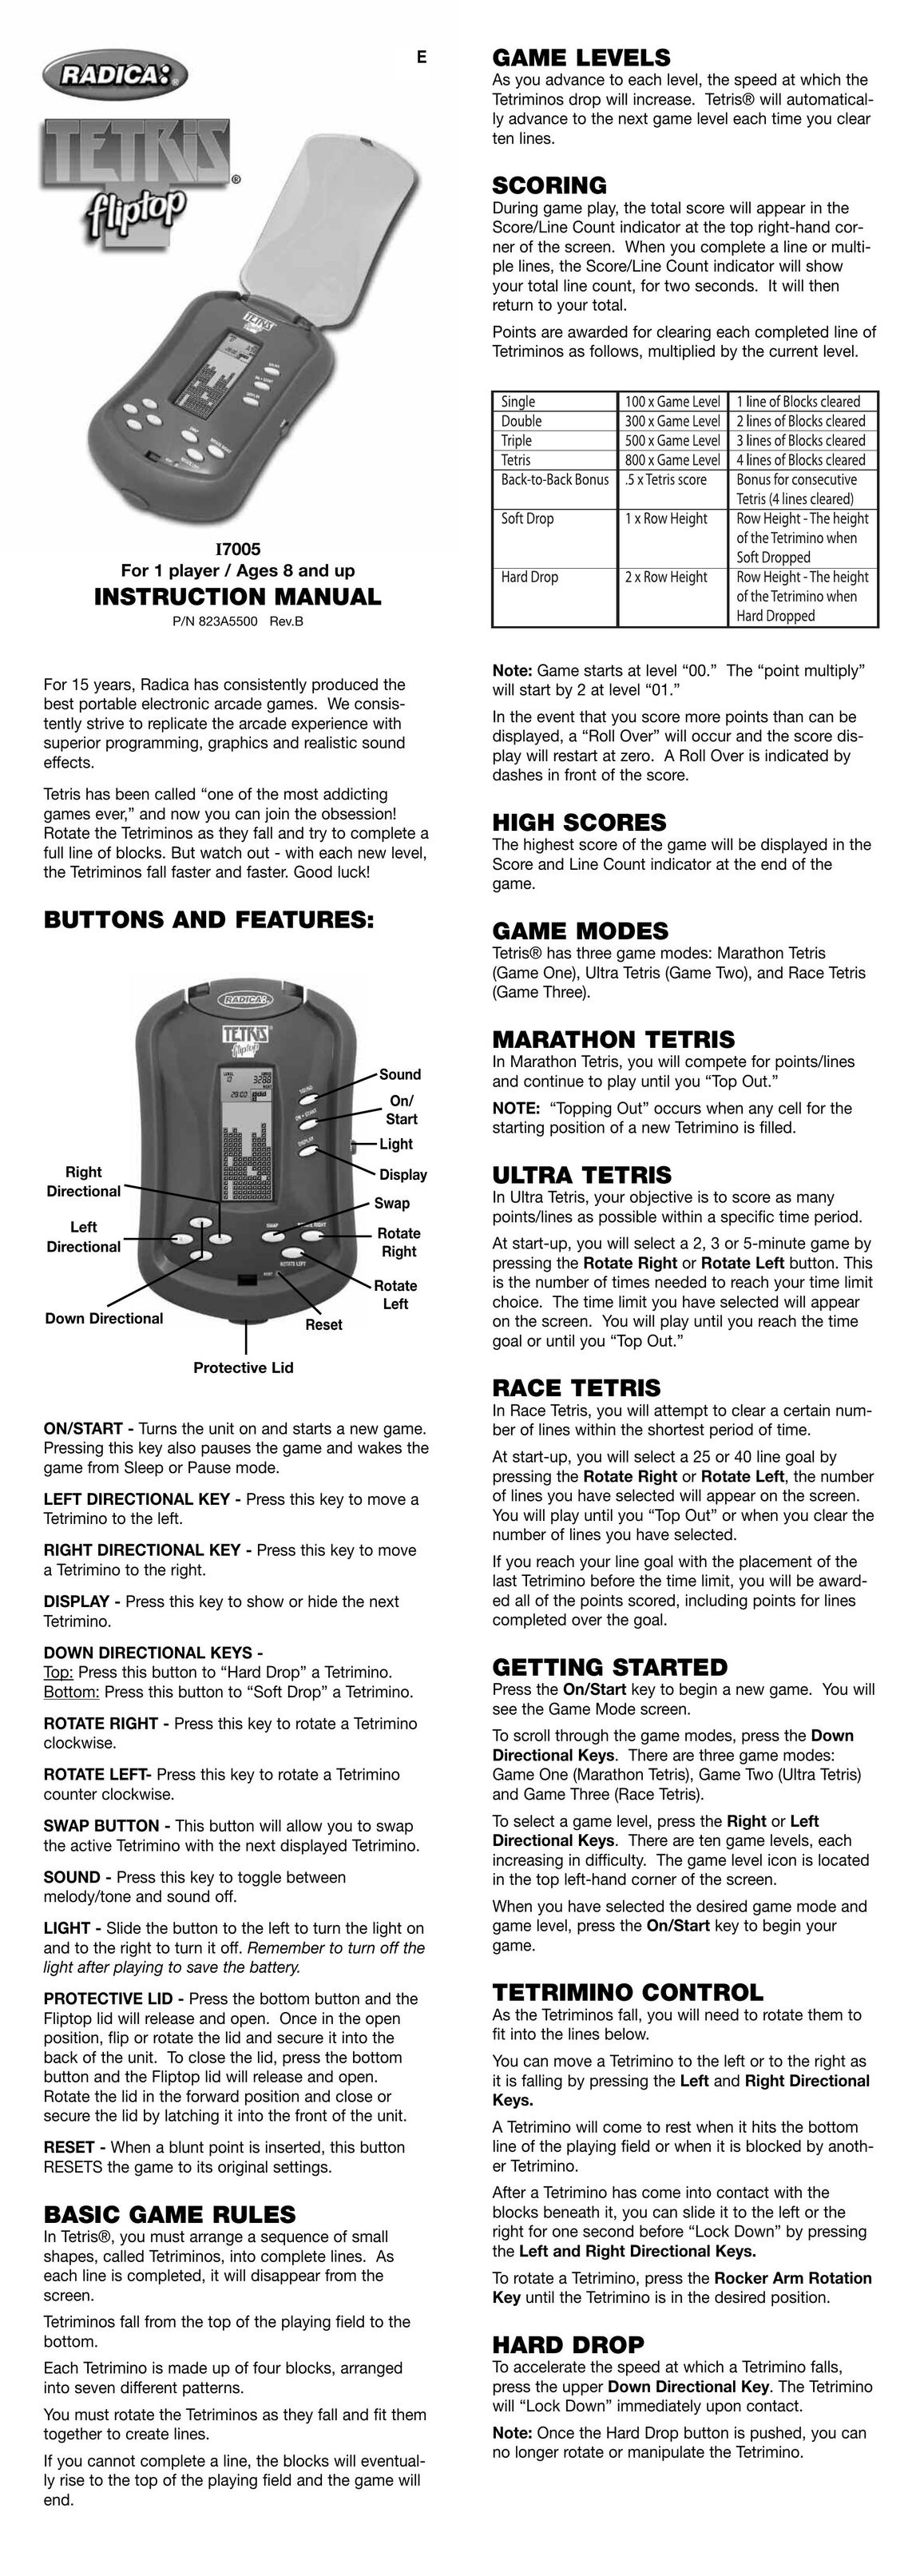 Radica Games I7005 Video Games User Manual